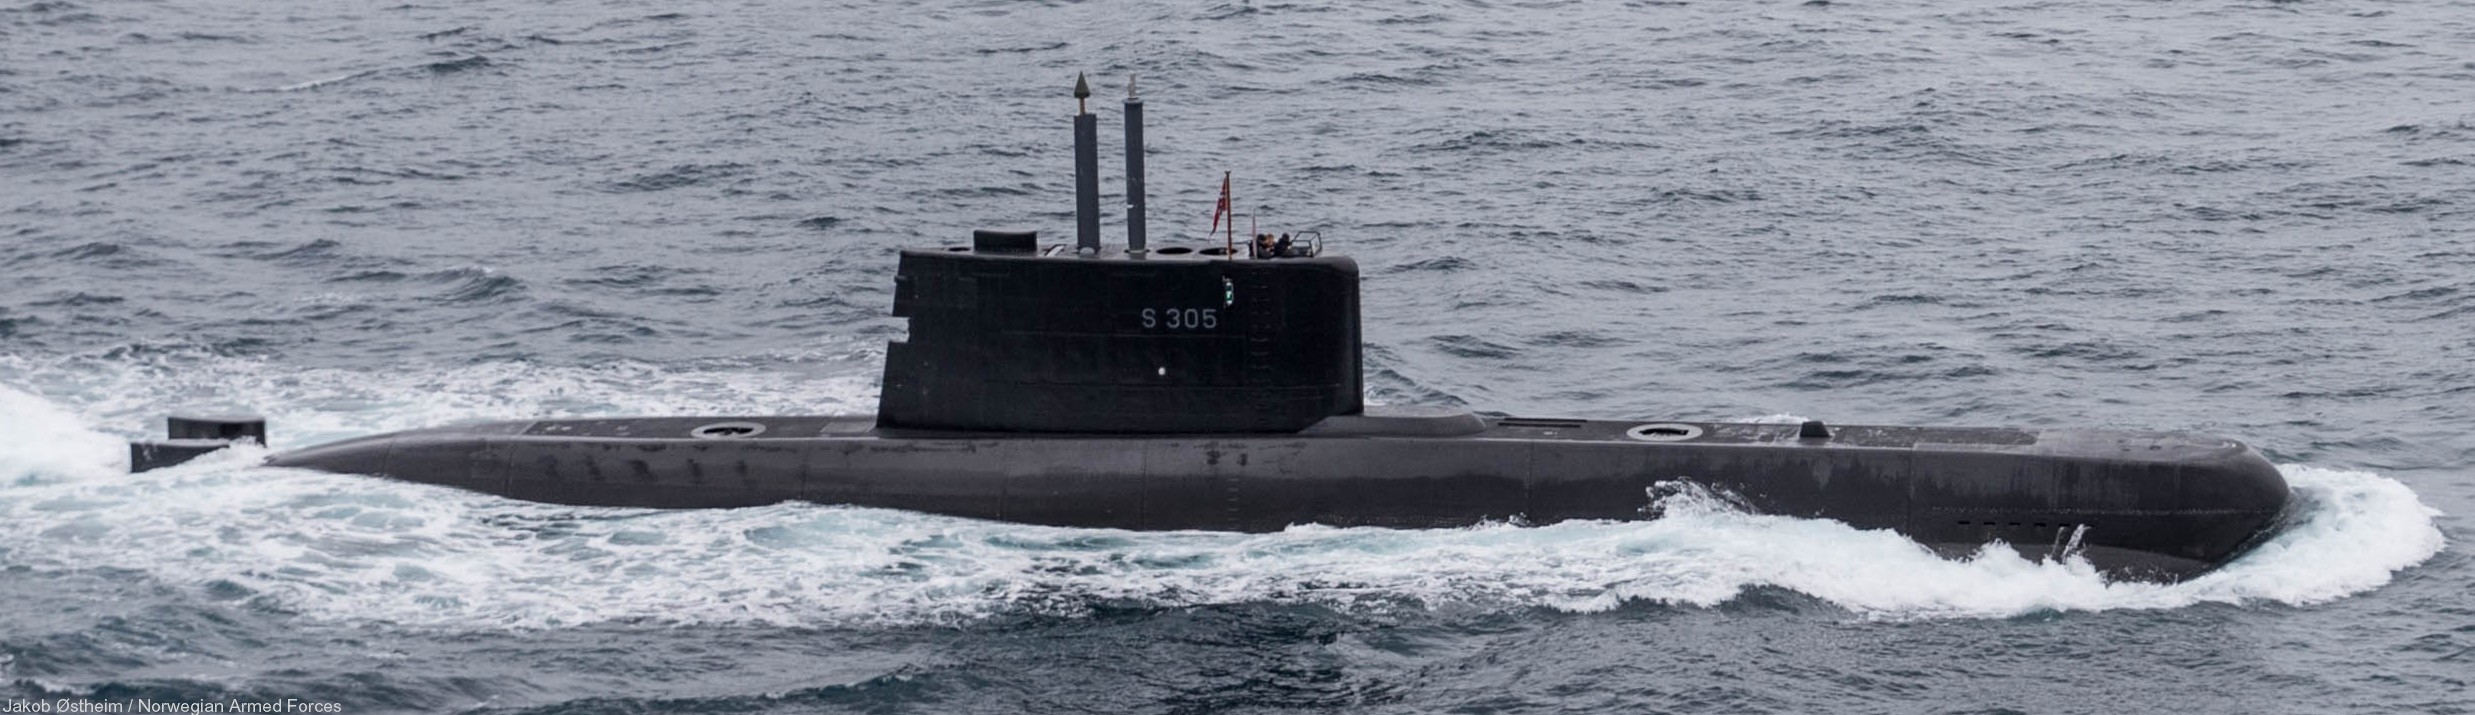 s-305 hnoms knm uredd ula class submarine type 210 attack ssk undervannsbåt royal norwegian navy sjøforsvaret 08